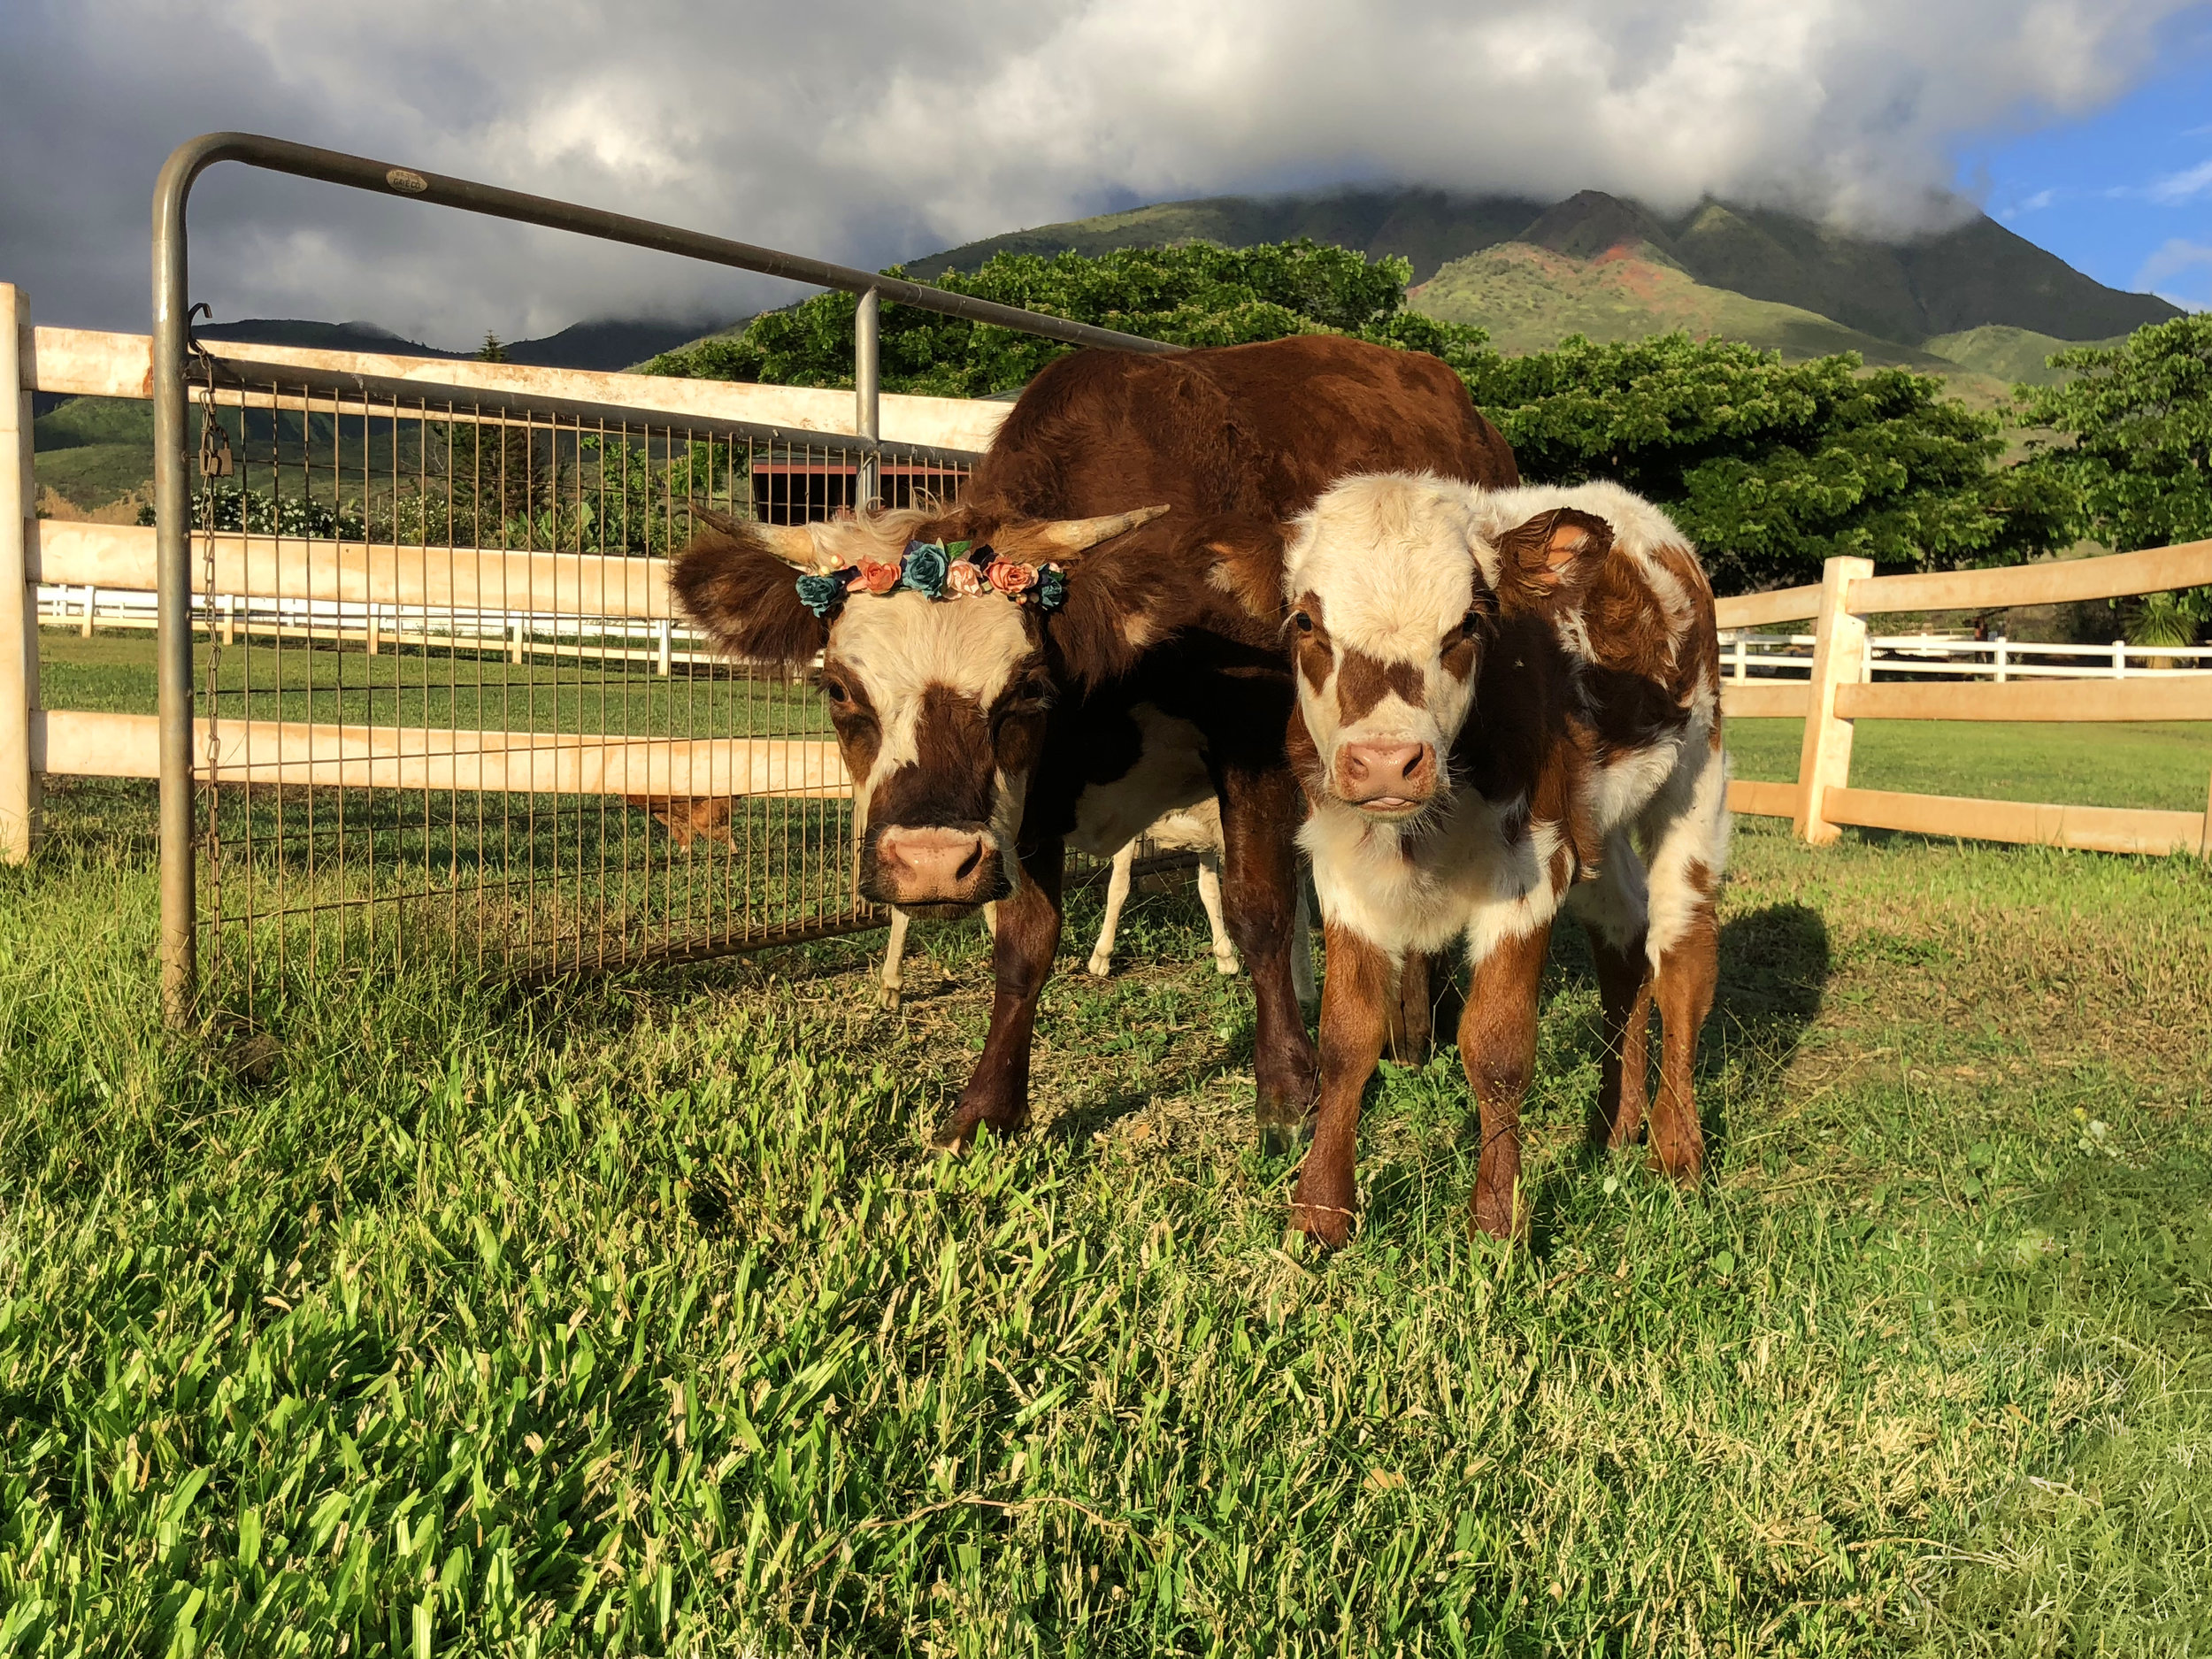 Maui-Lahaina-Animal-petting-zoo-cows1.jpg